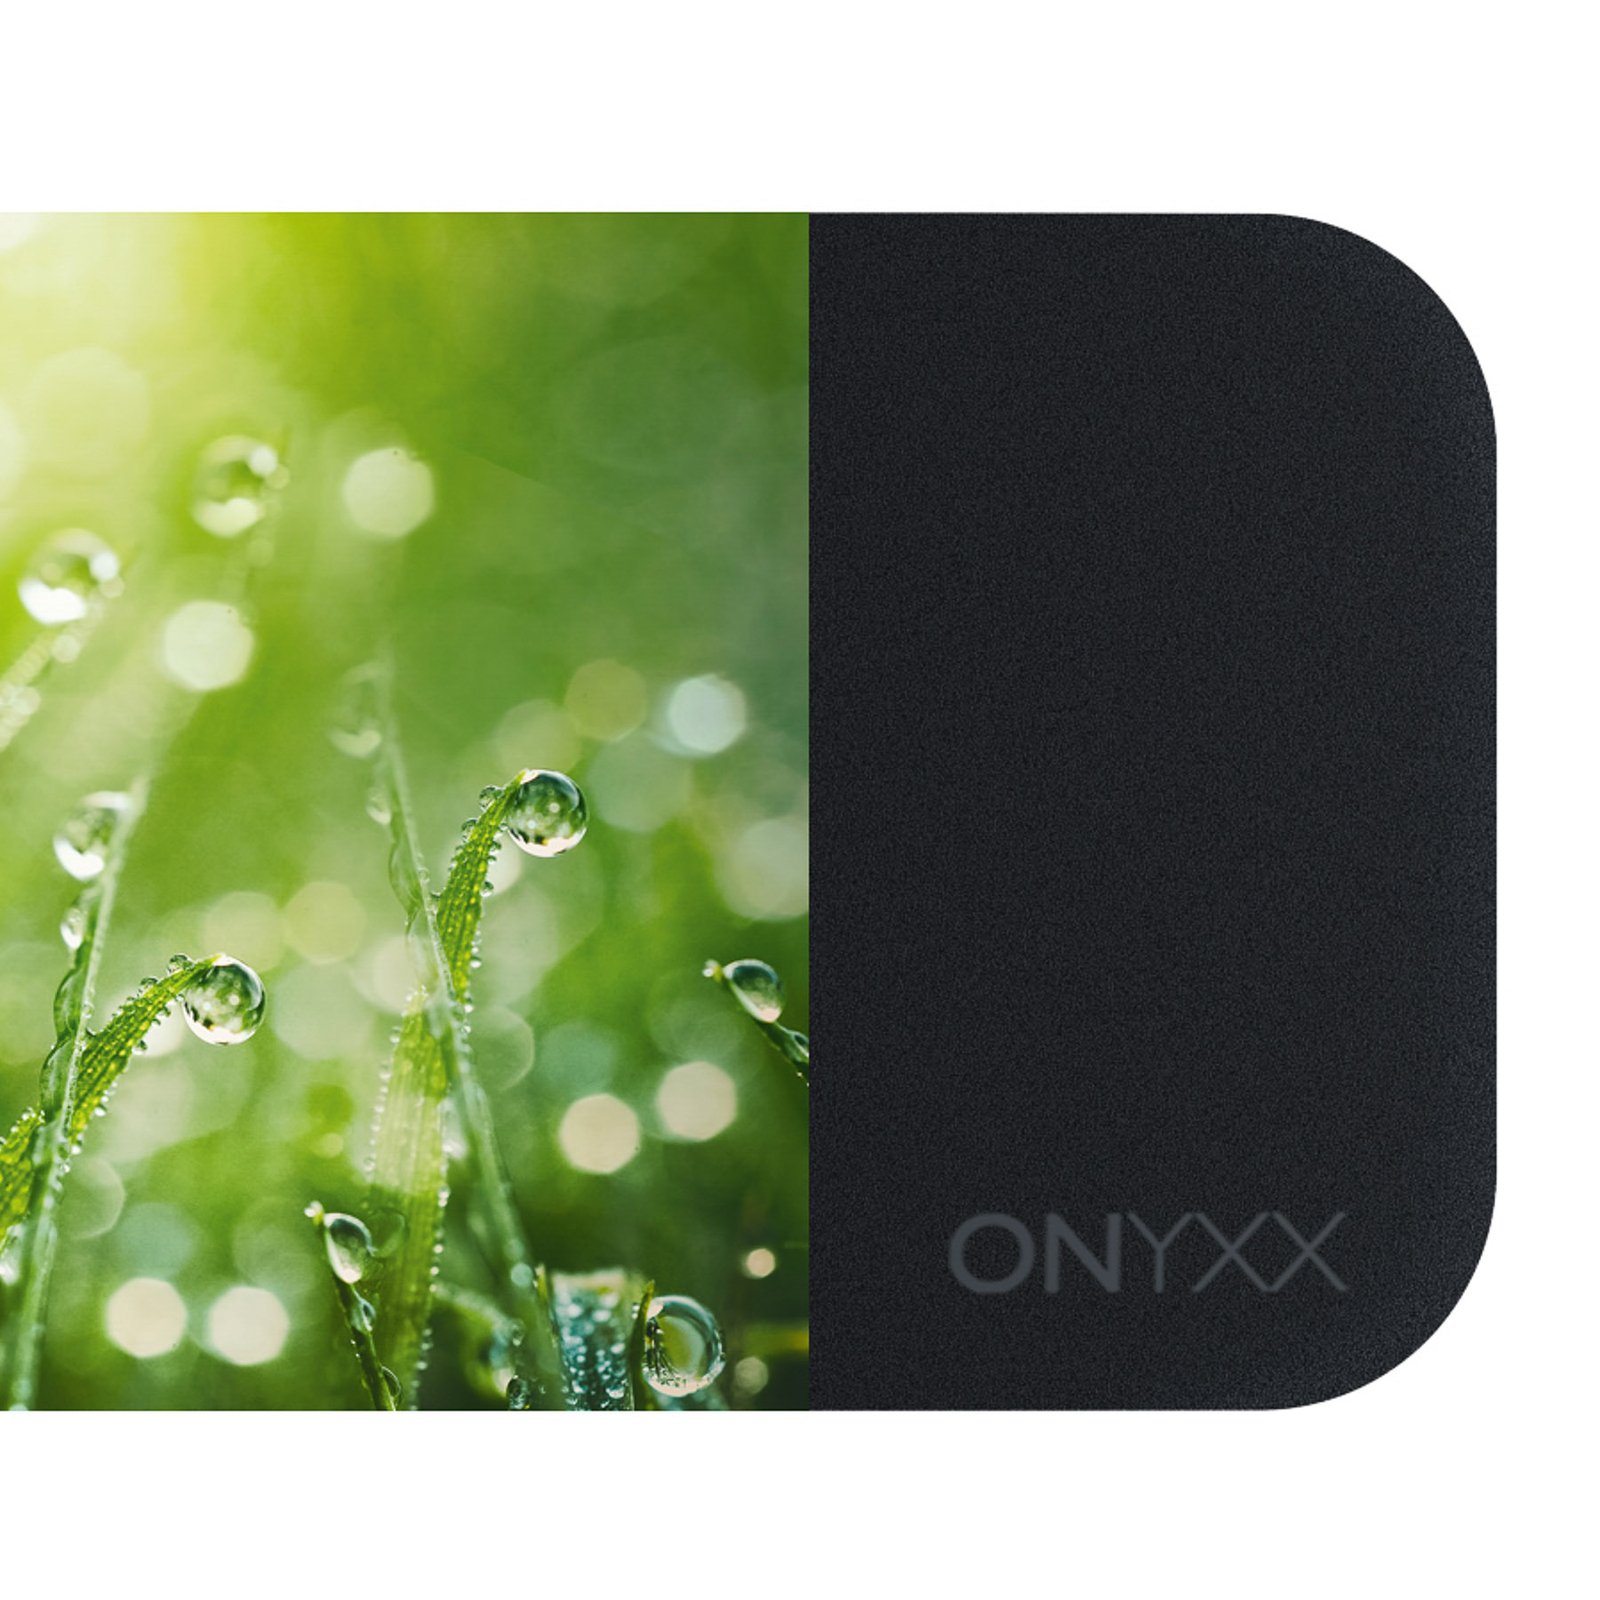 GRIMMEISEN Onyxx Linea Pro pendant natural/black